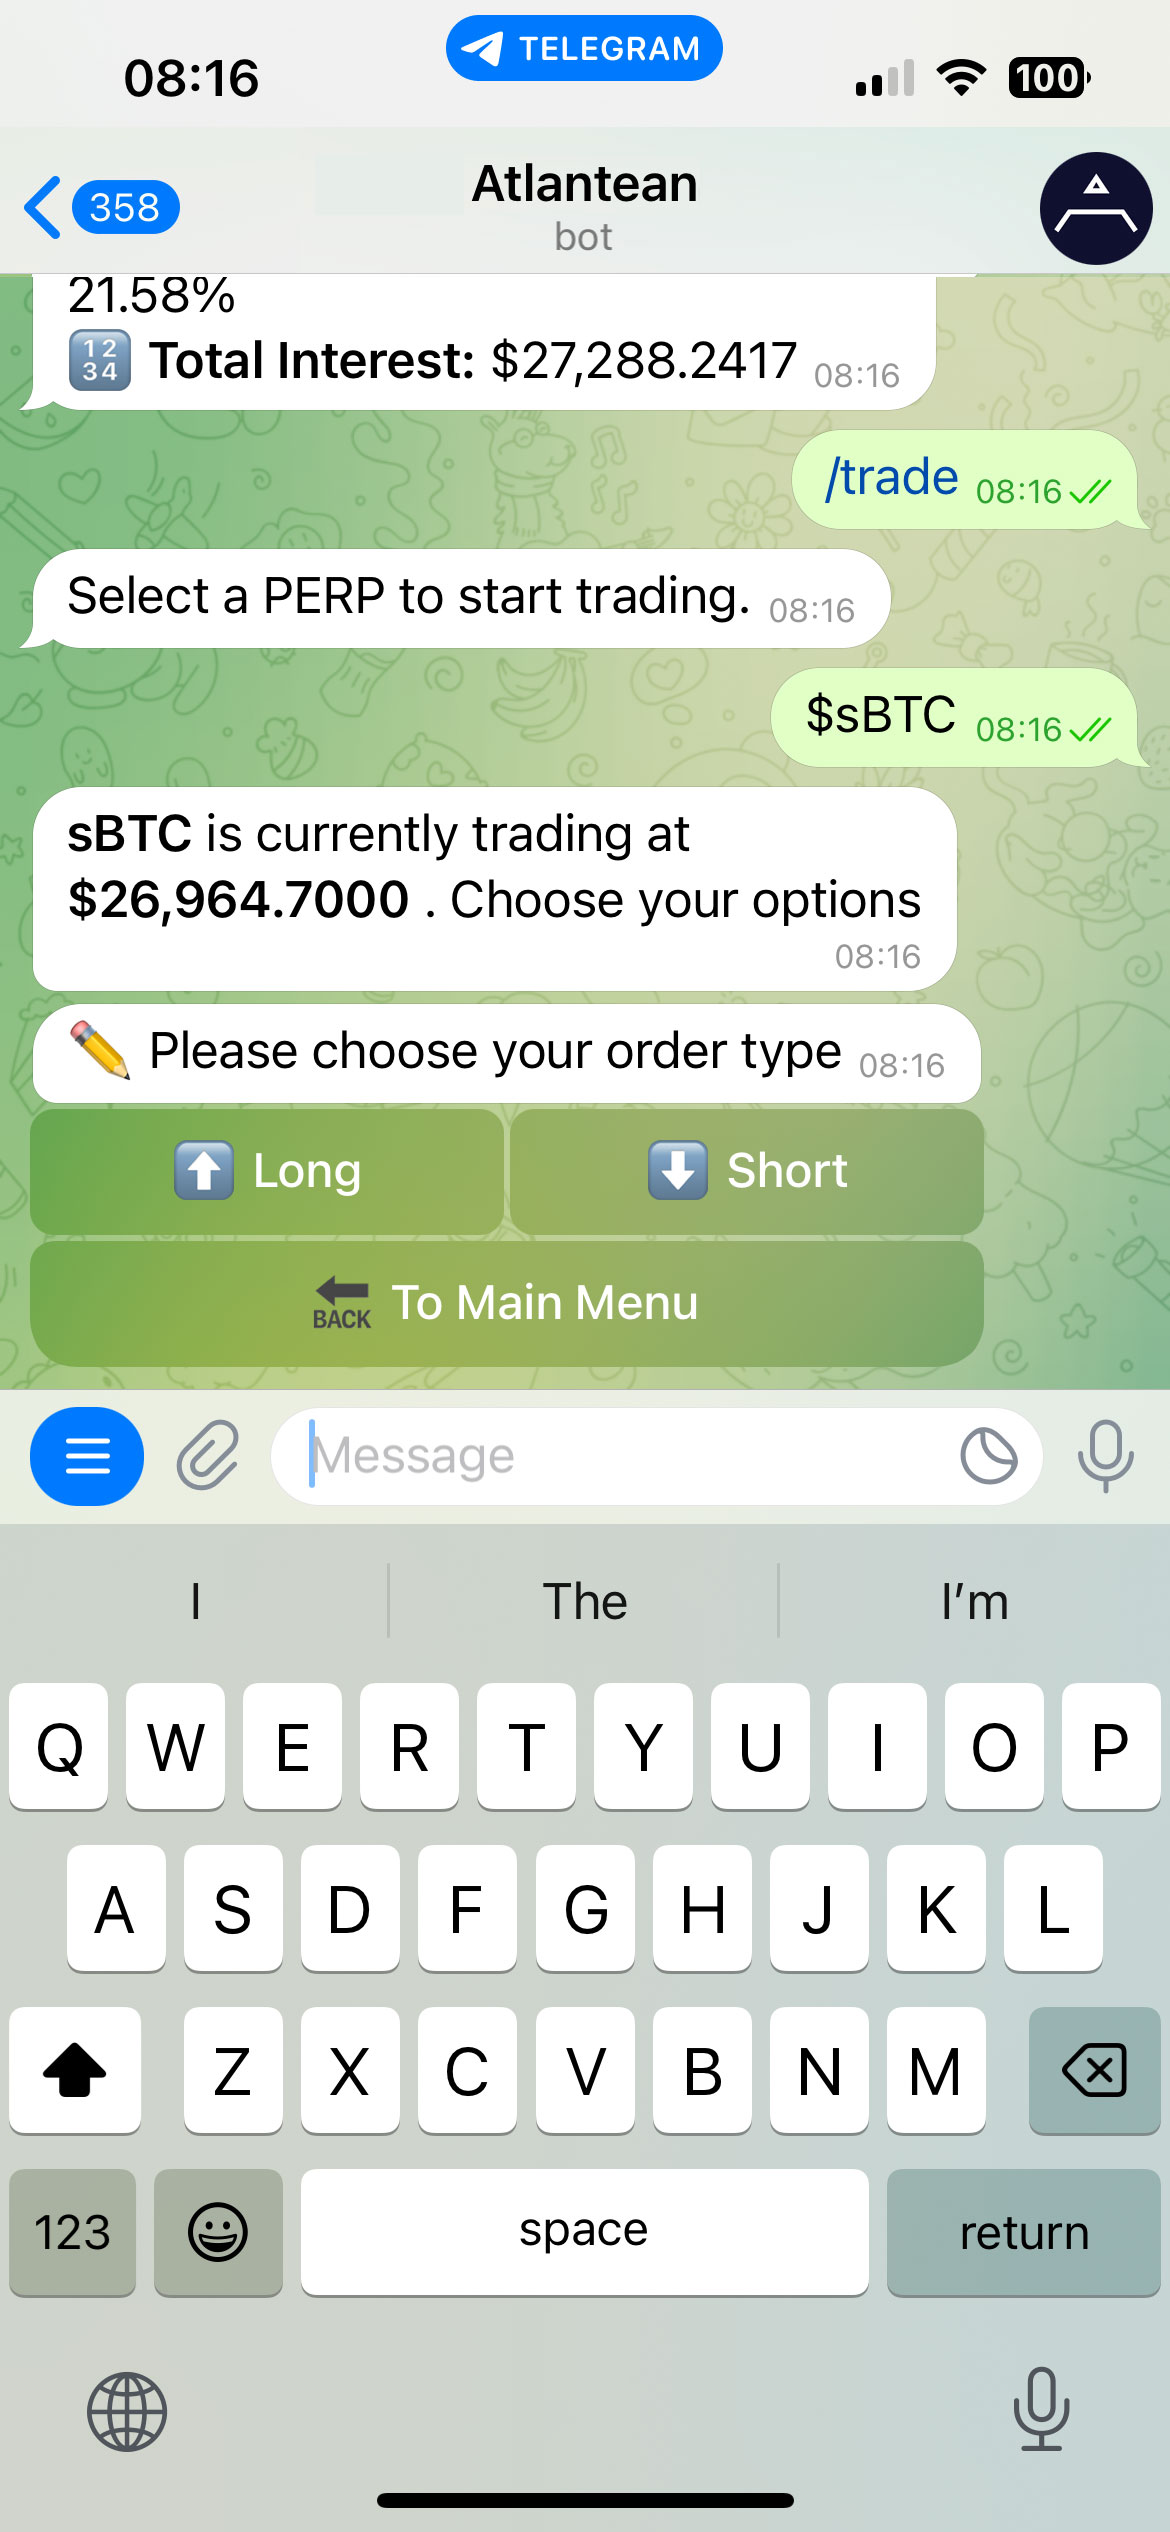 Atlantean Trading Bot for Telegram, Easy Fast Crypto Perpetual Trading